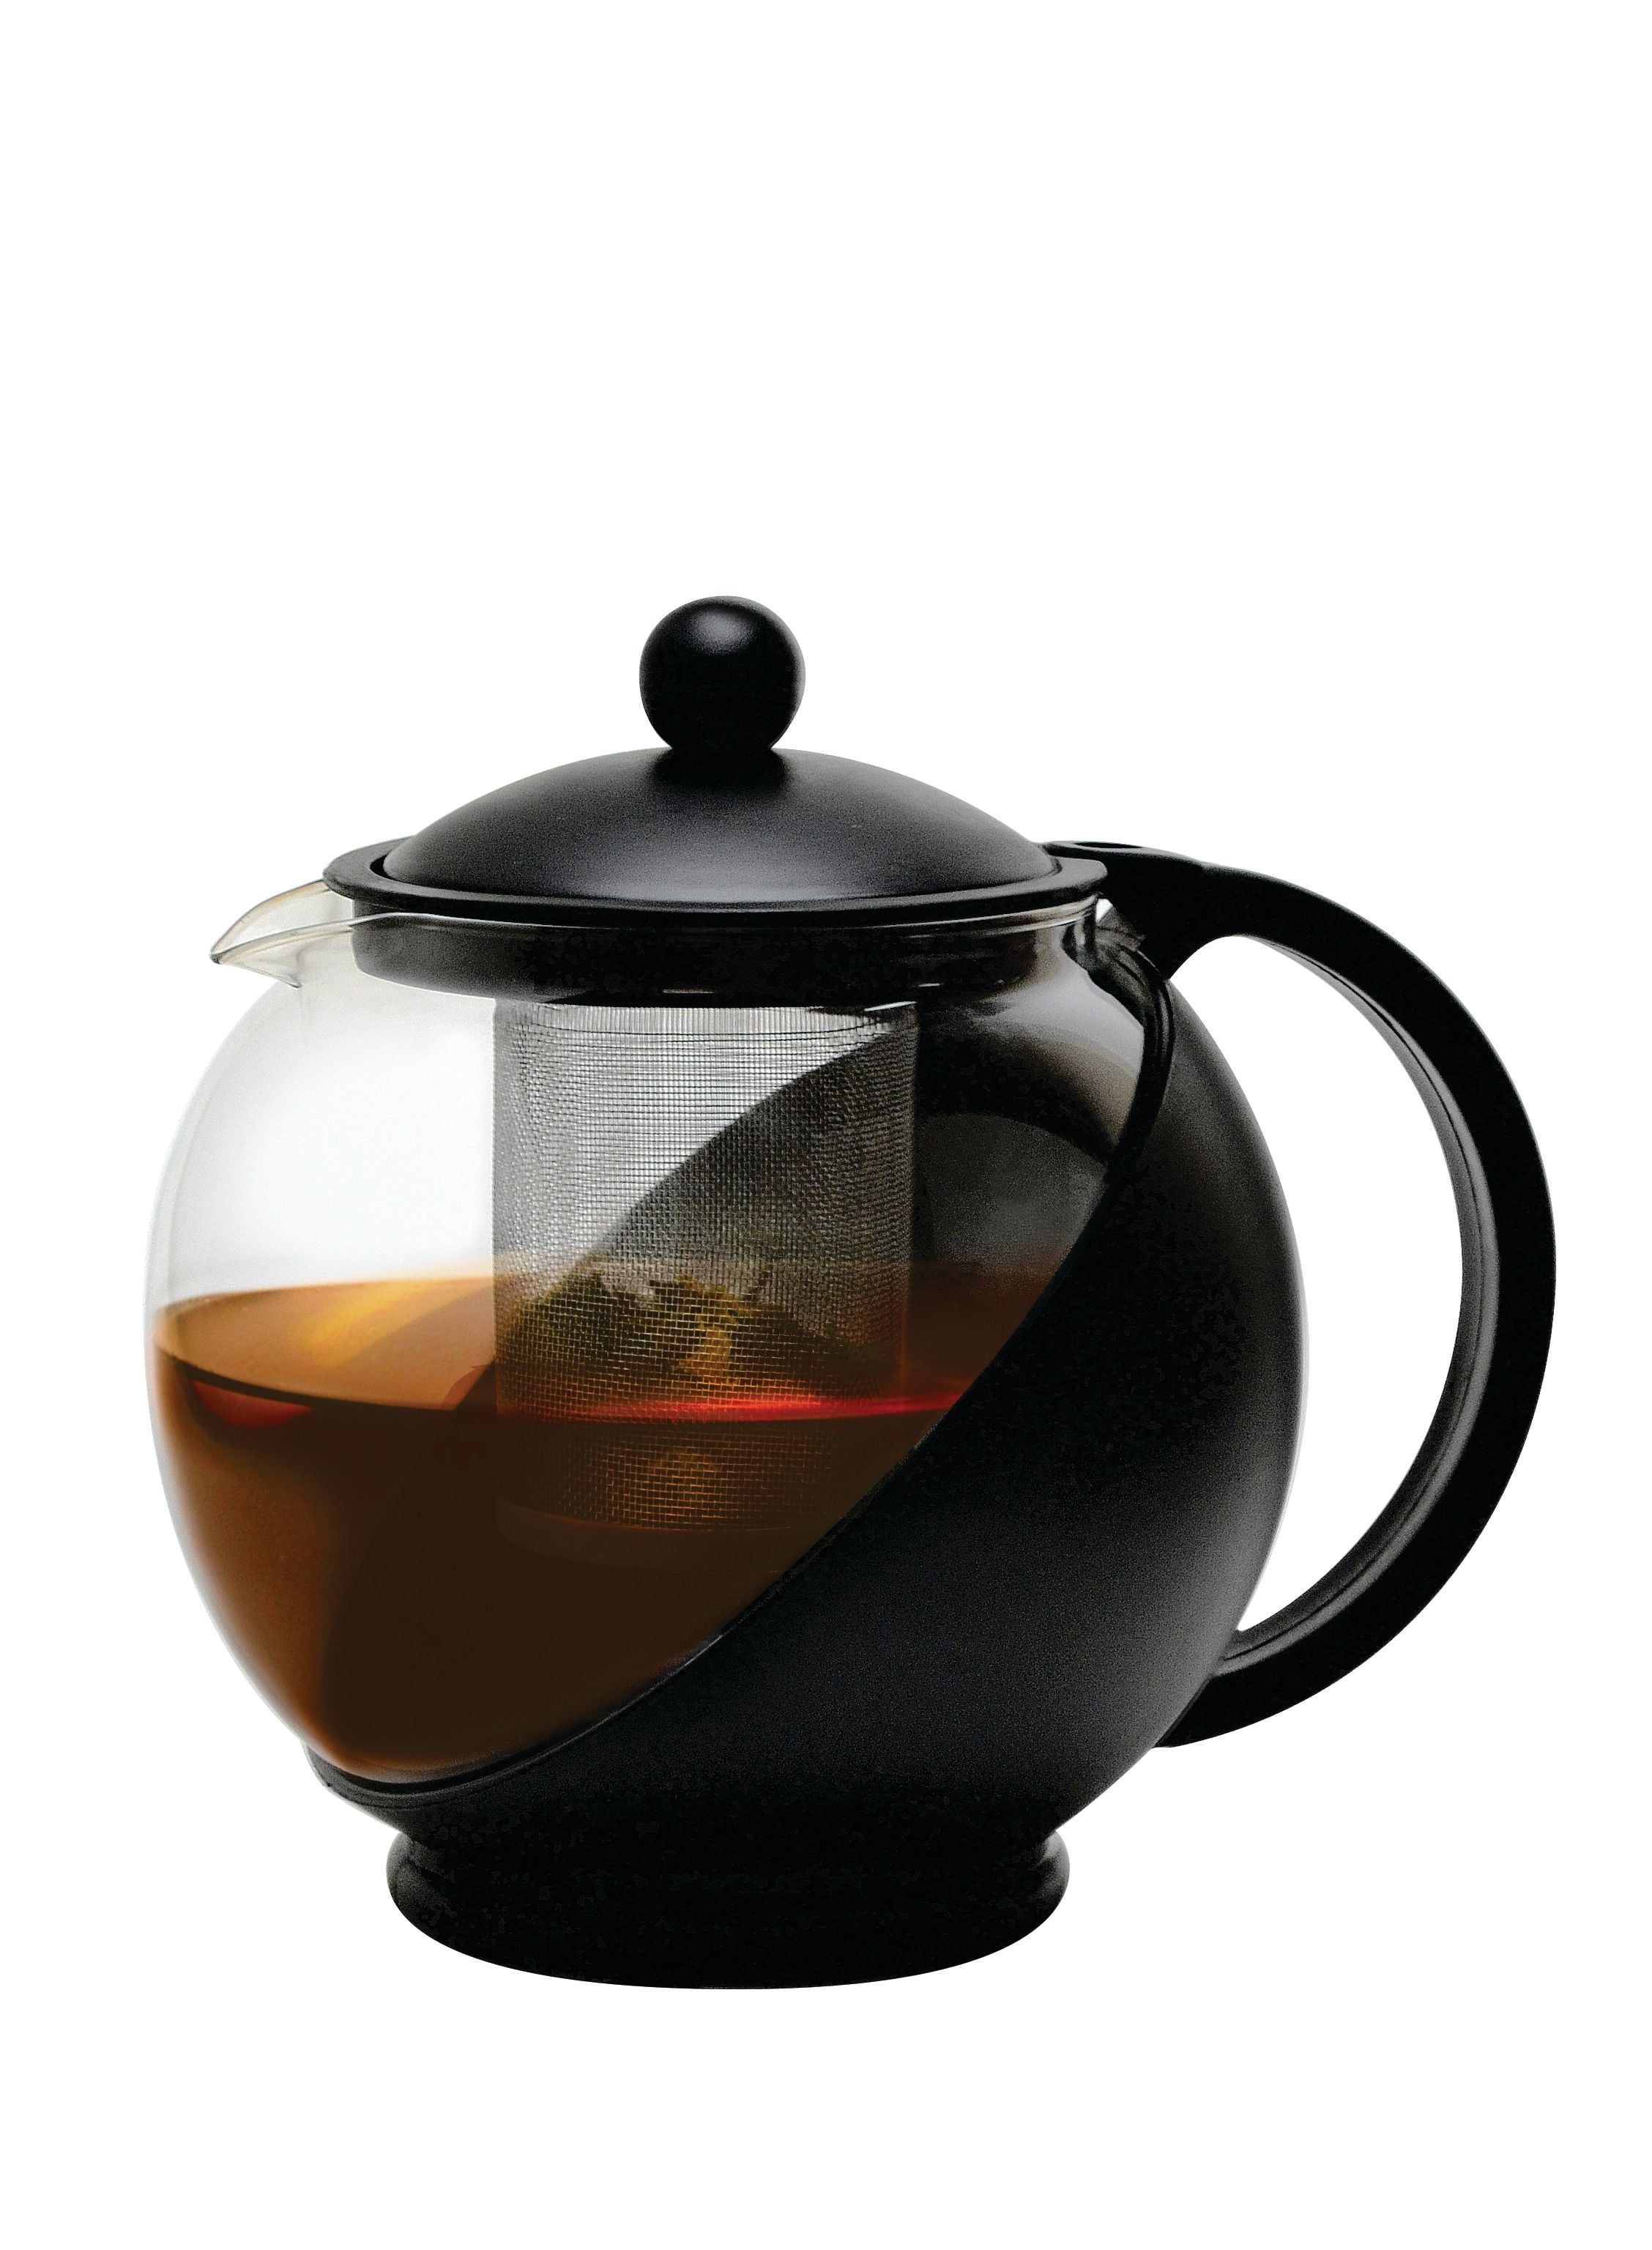 Venoly Stainless Steel Tea Pot With Removable Infuser For Loose Leaf & Tea  Bags - Dishwasher Safe & Heat Resistant - 1.5 Liter 